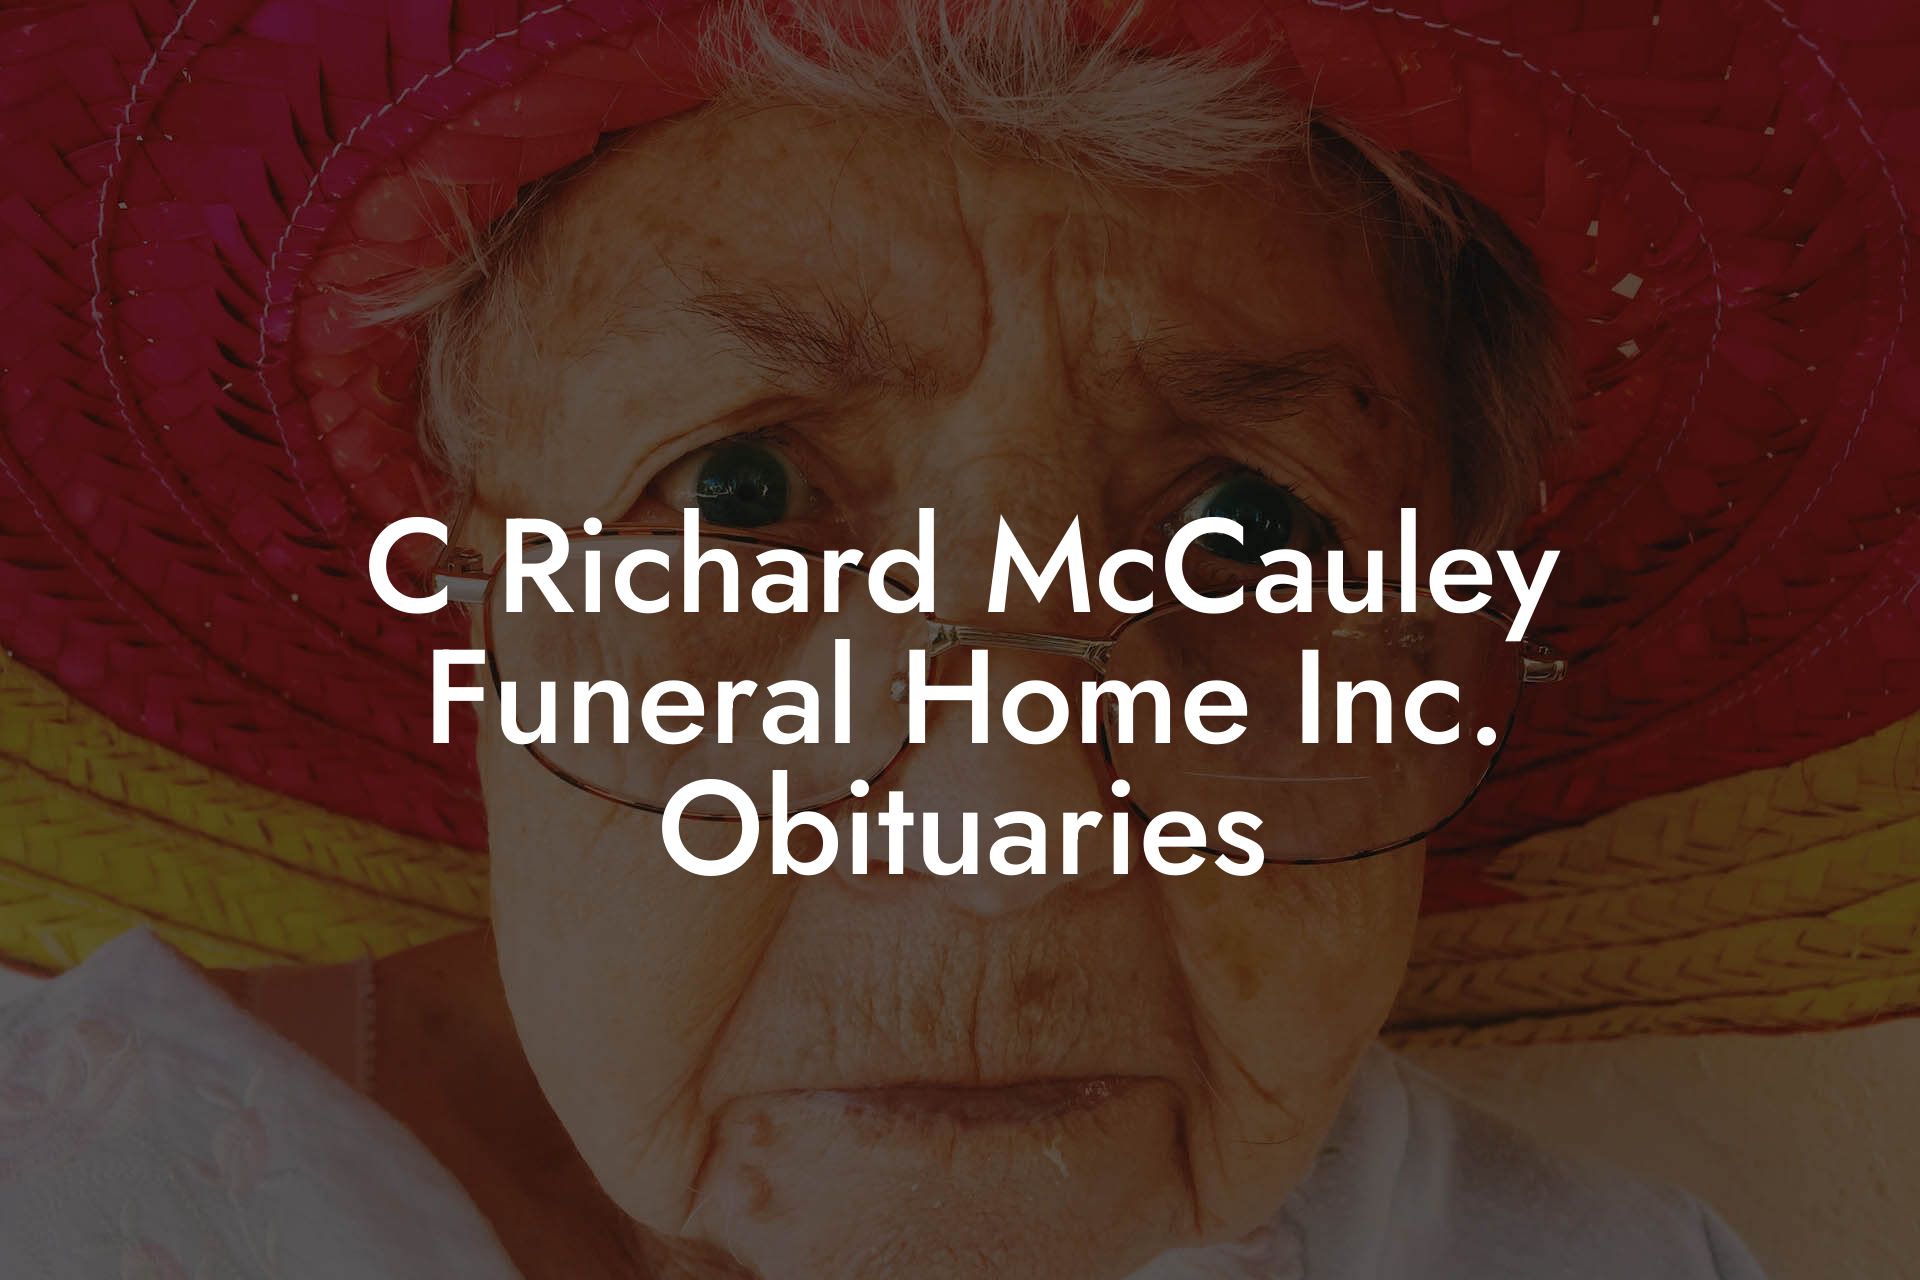 C Richard McCauley Funeral Home Inc. Obituaries